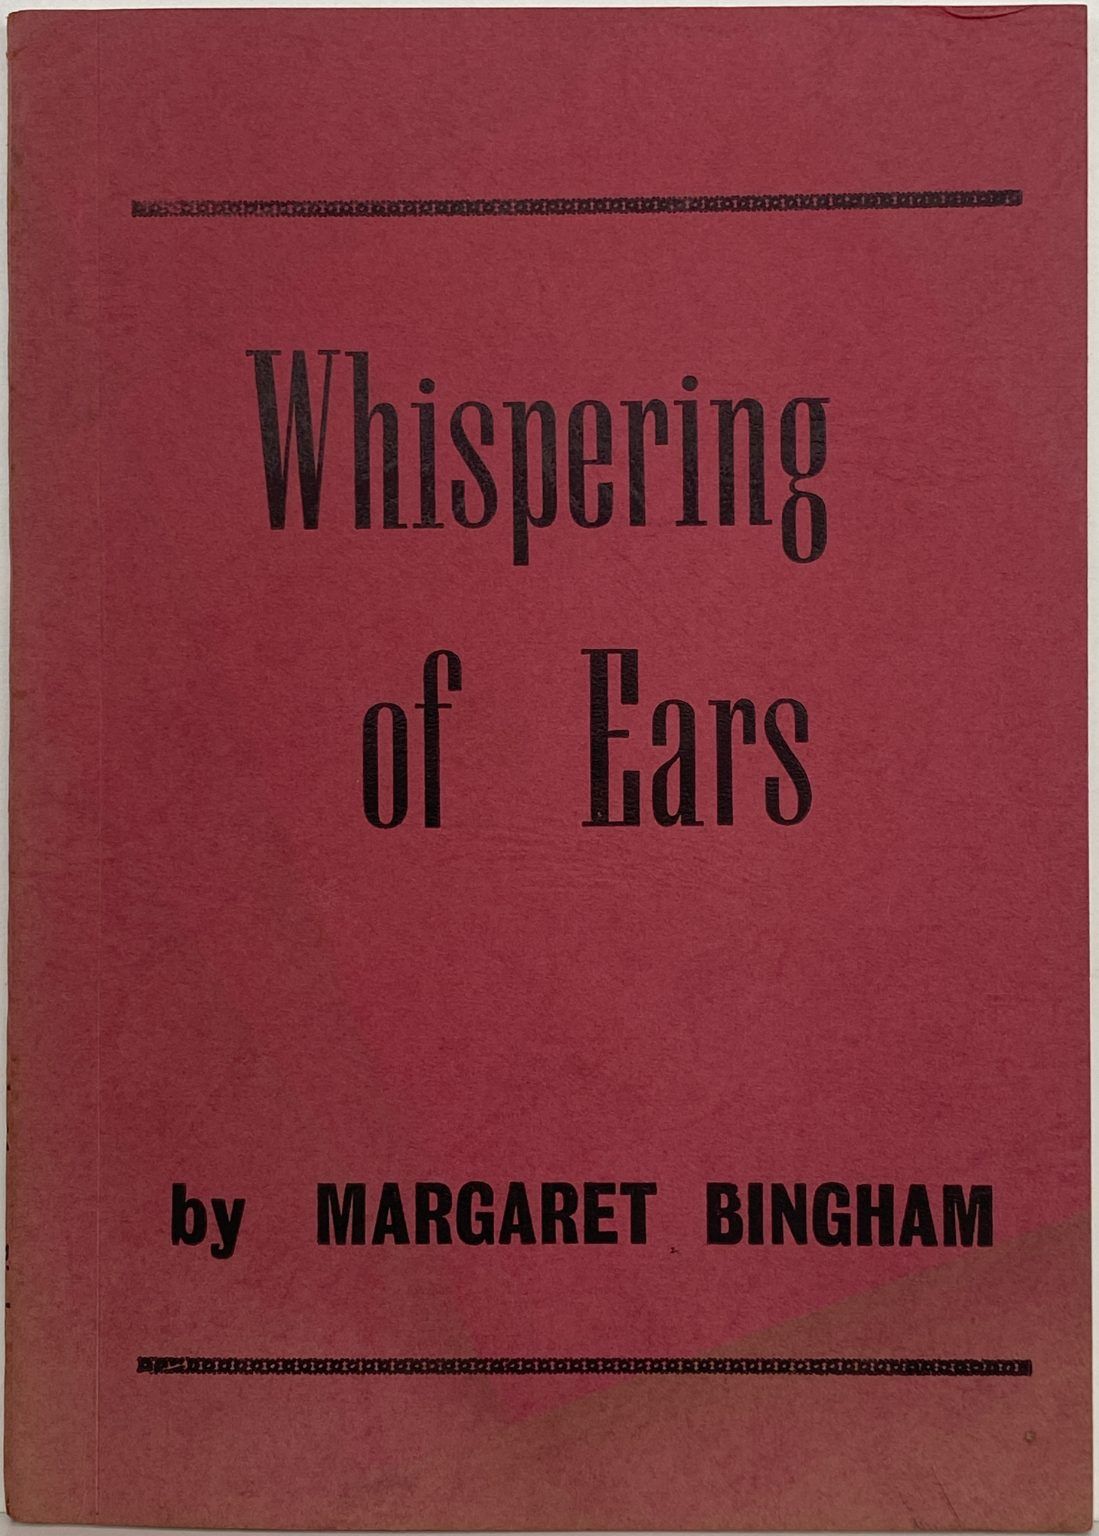 WHISPERING of EARS